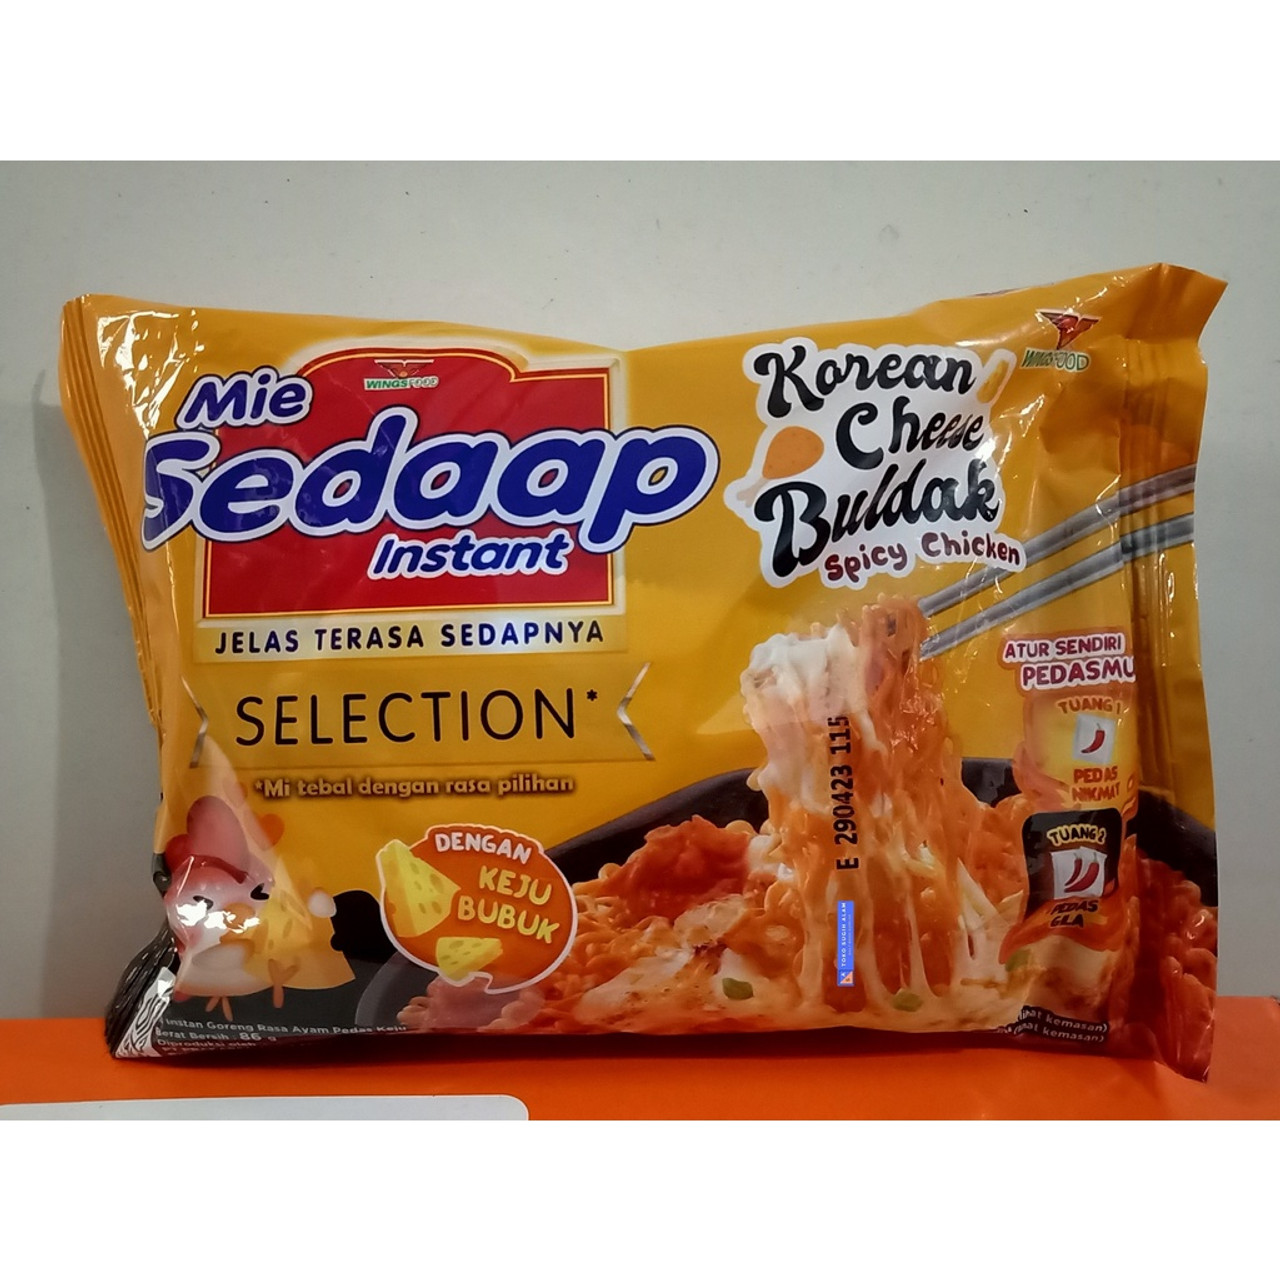 Sedaap Korean Cheese Buldak Fried Instant Noodles 86 gr